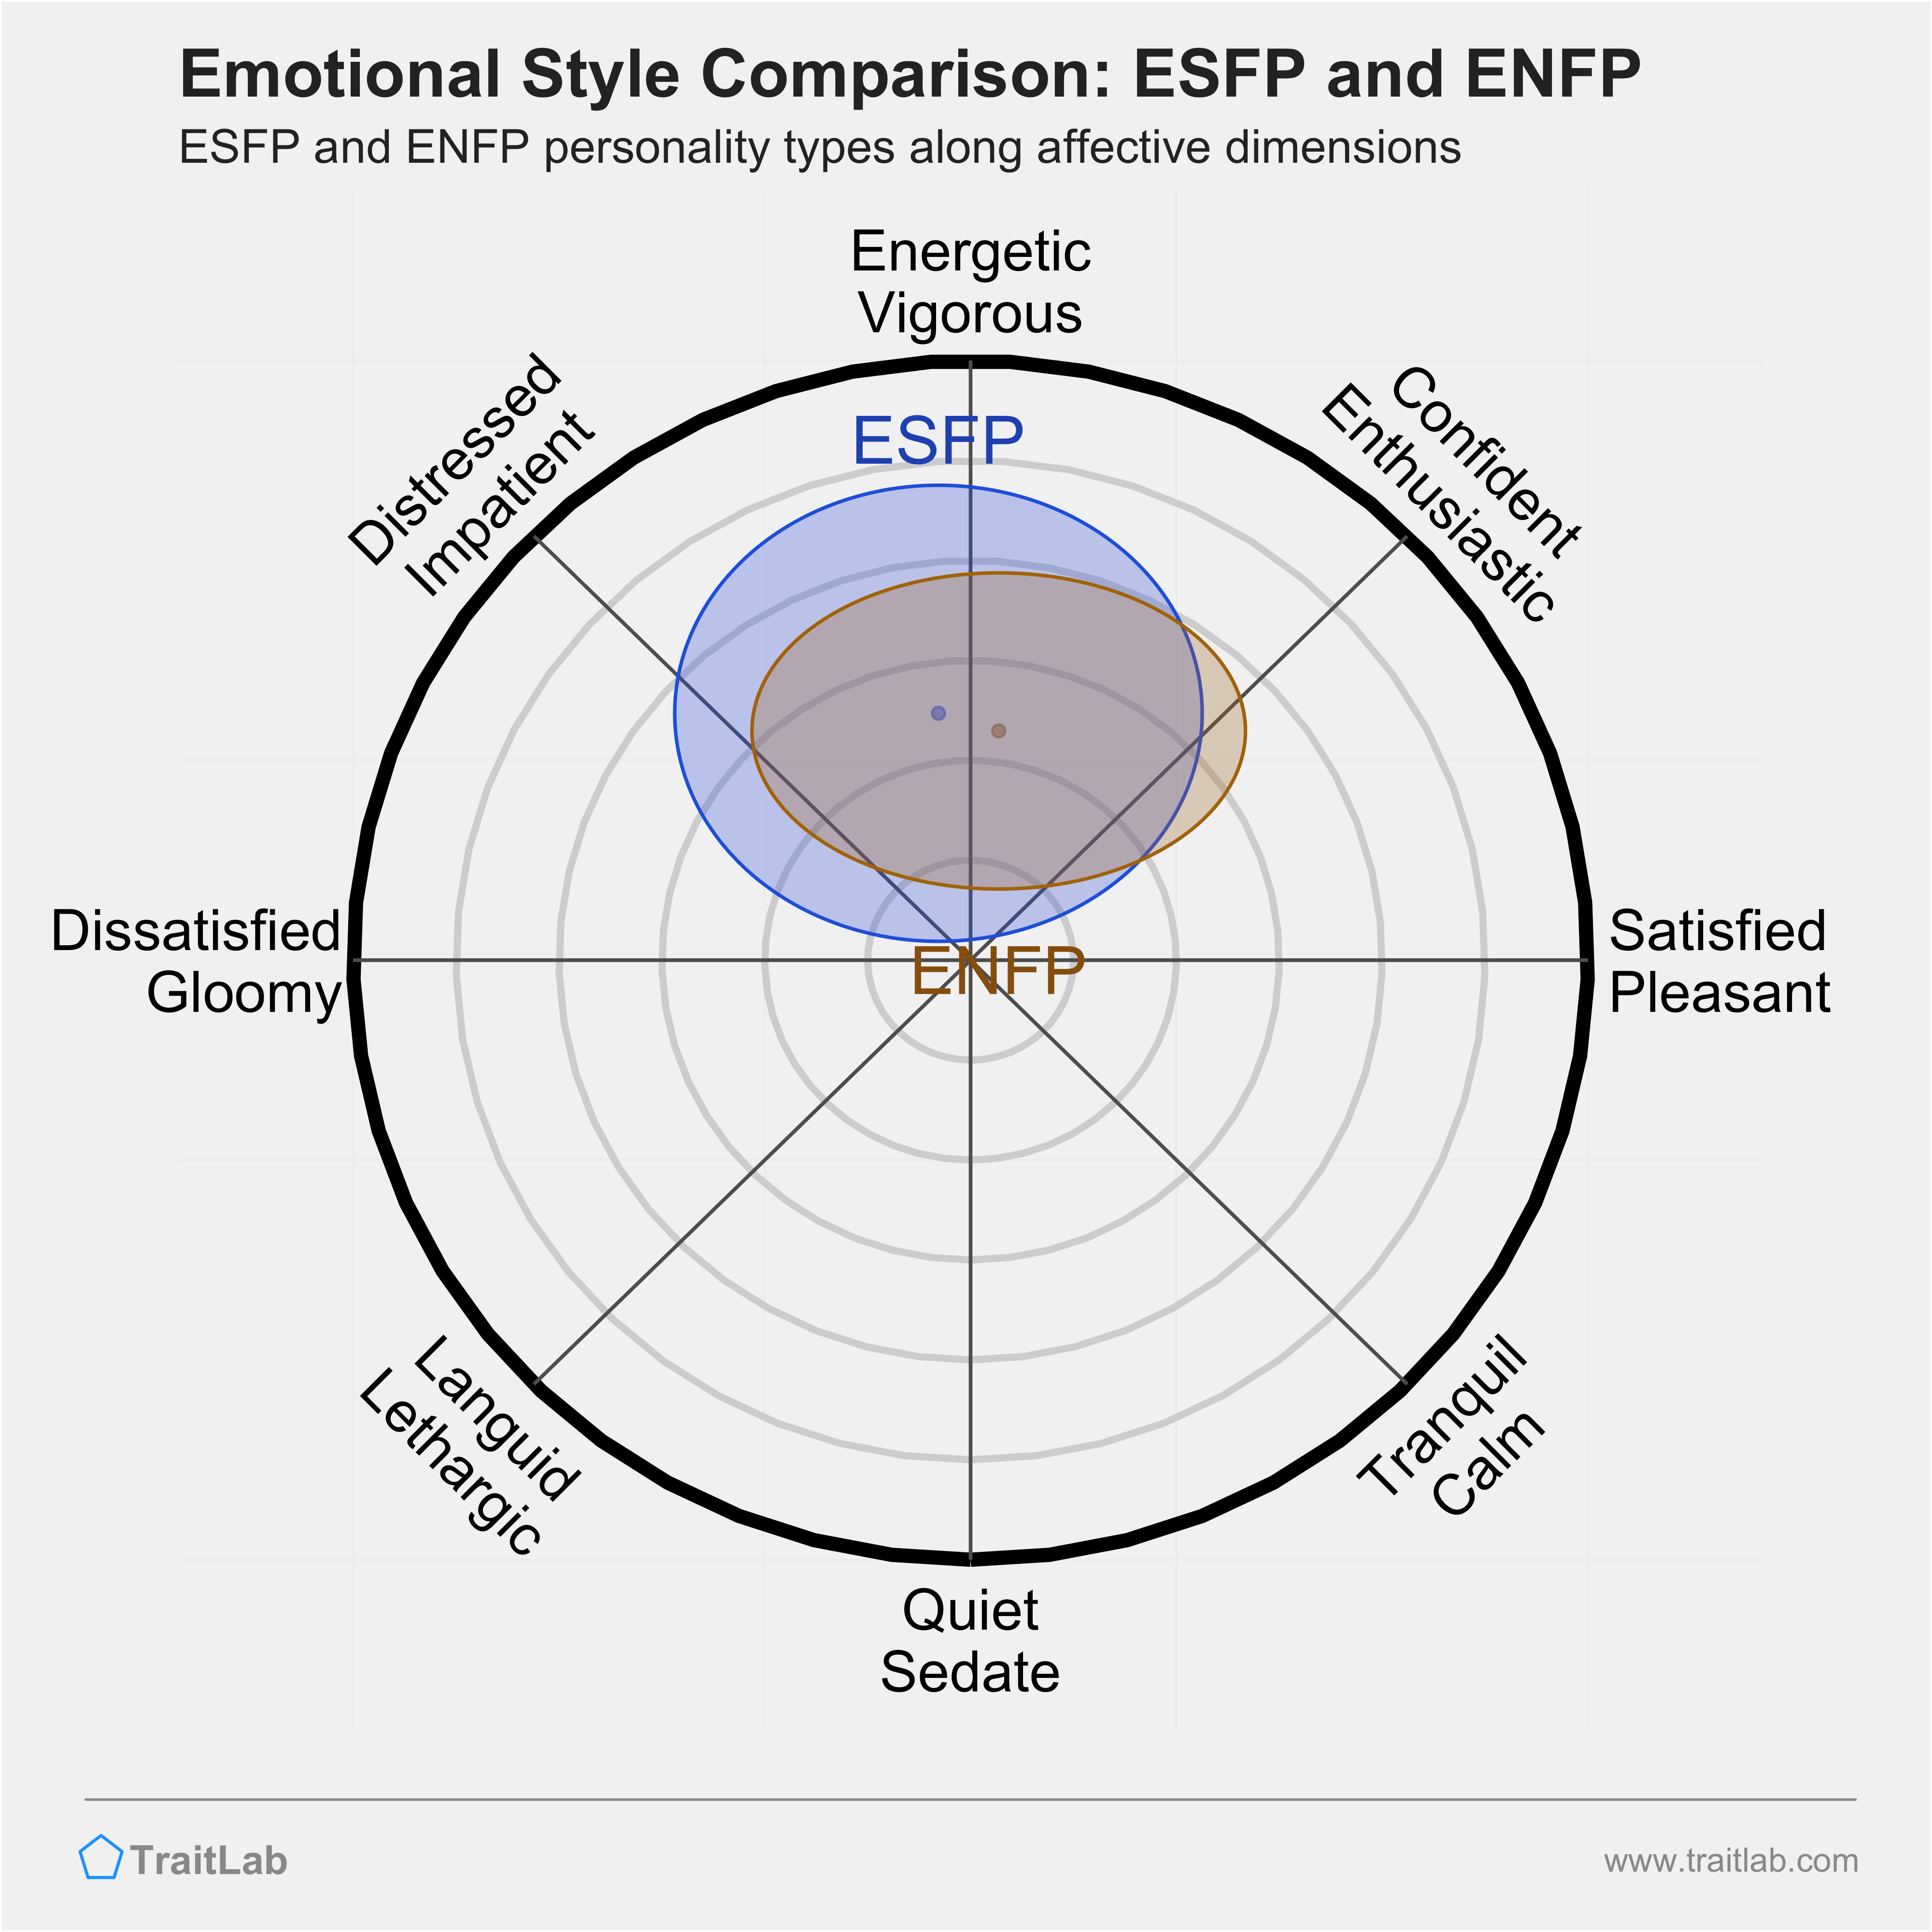 ESFP and ENFP comparison across emotional (affective) dimensions